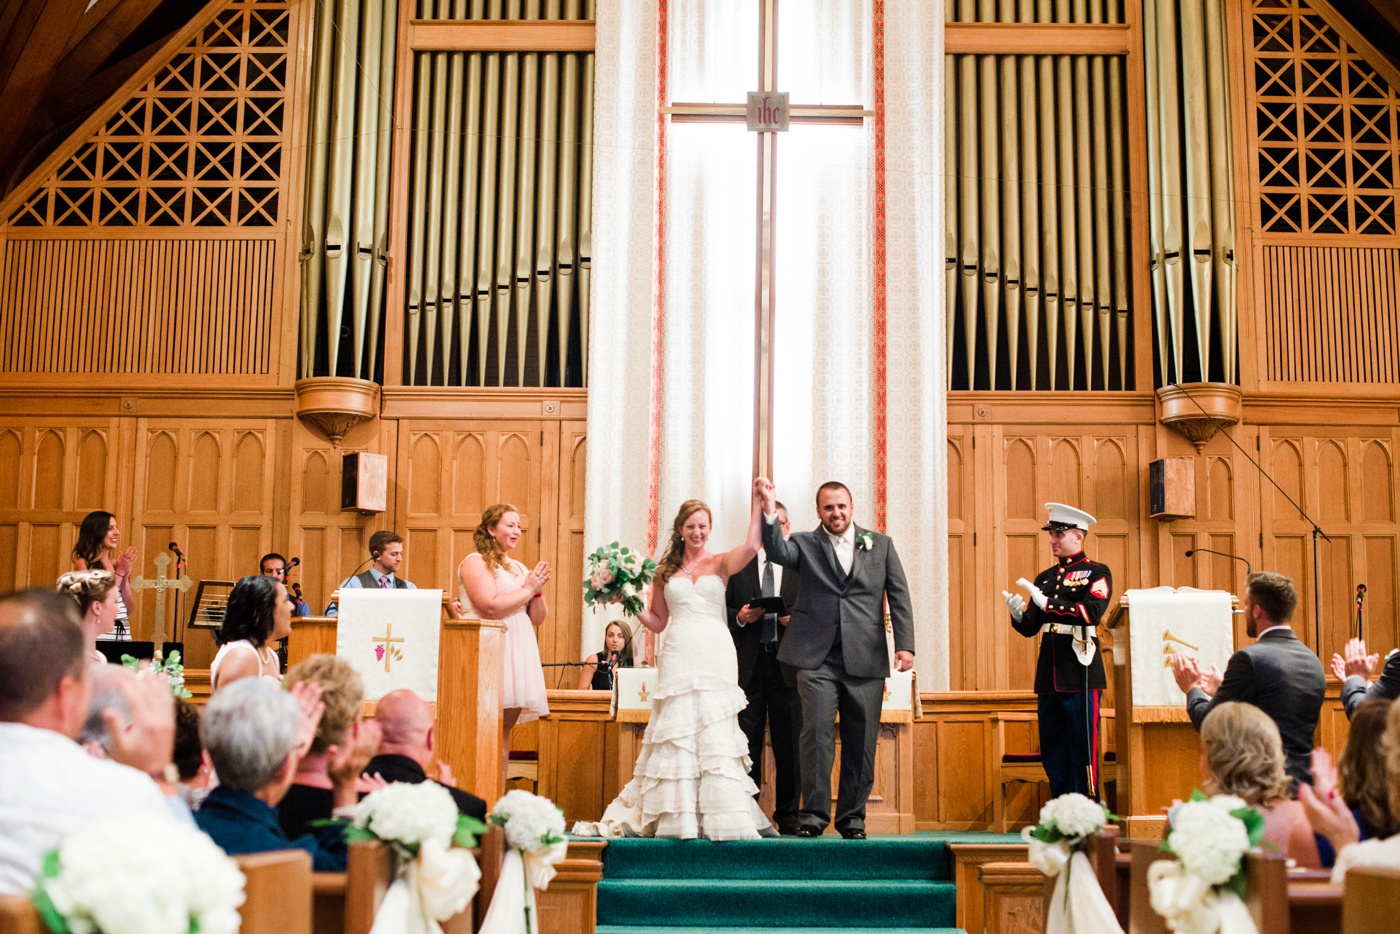 45 - Olivet United Methodist Church - Coatesville Pennsylvania Wedding Ceremony photo